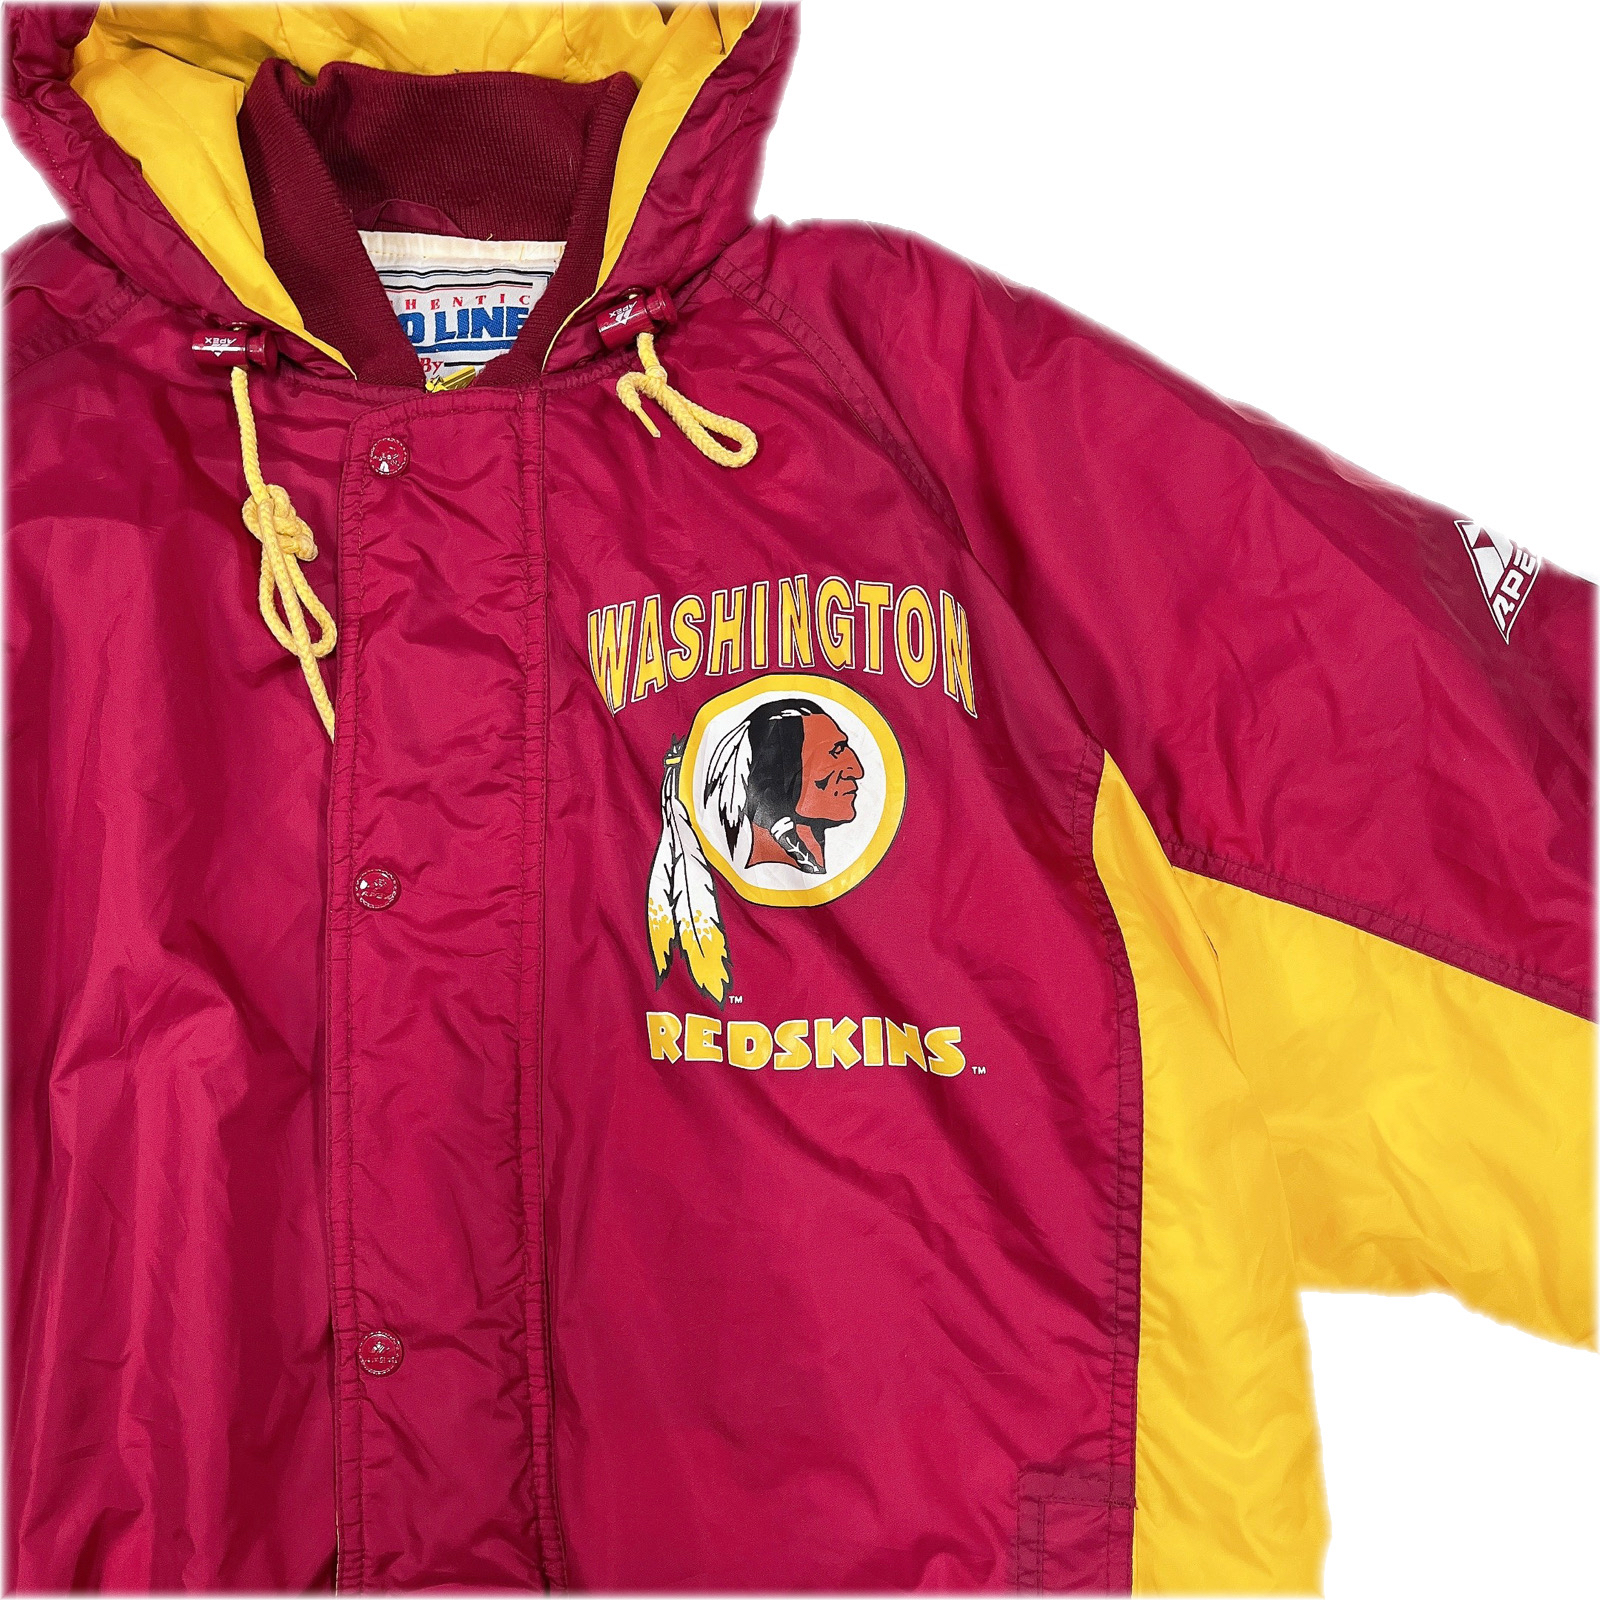 90s Washington Redskins NFL Hooded